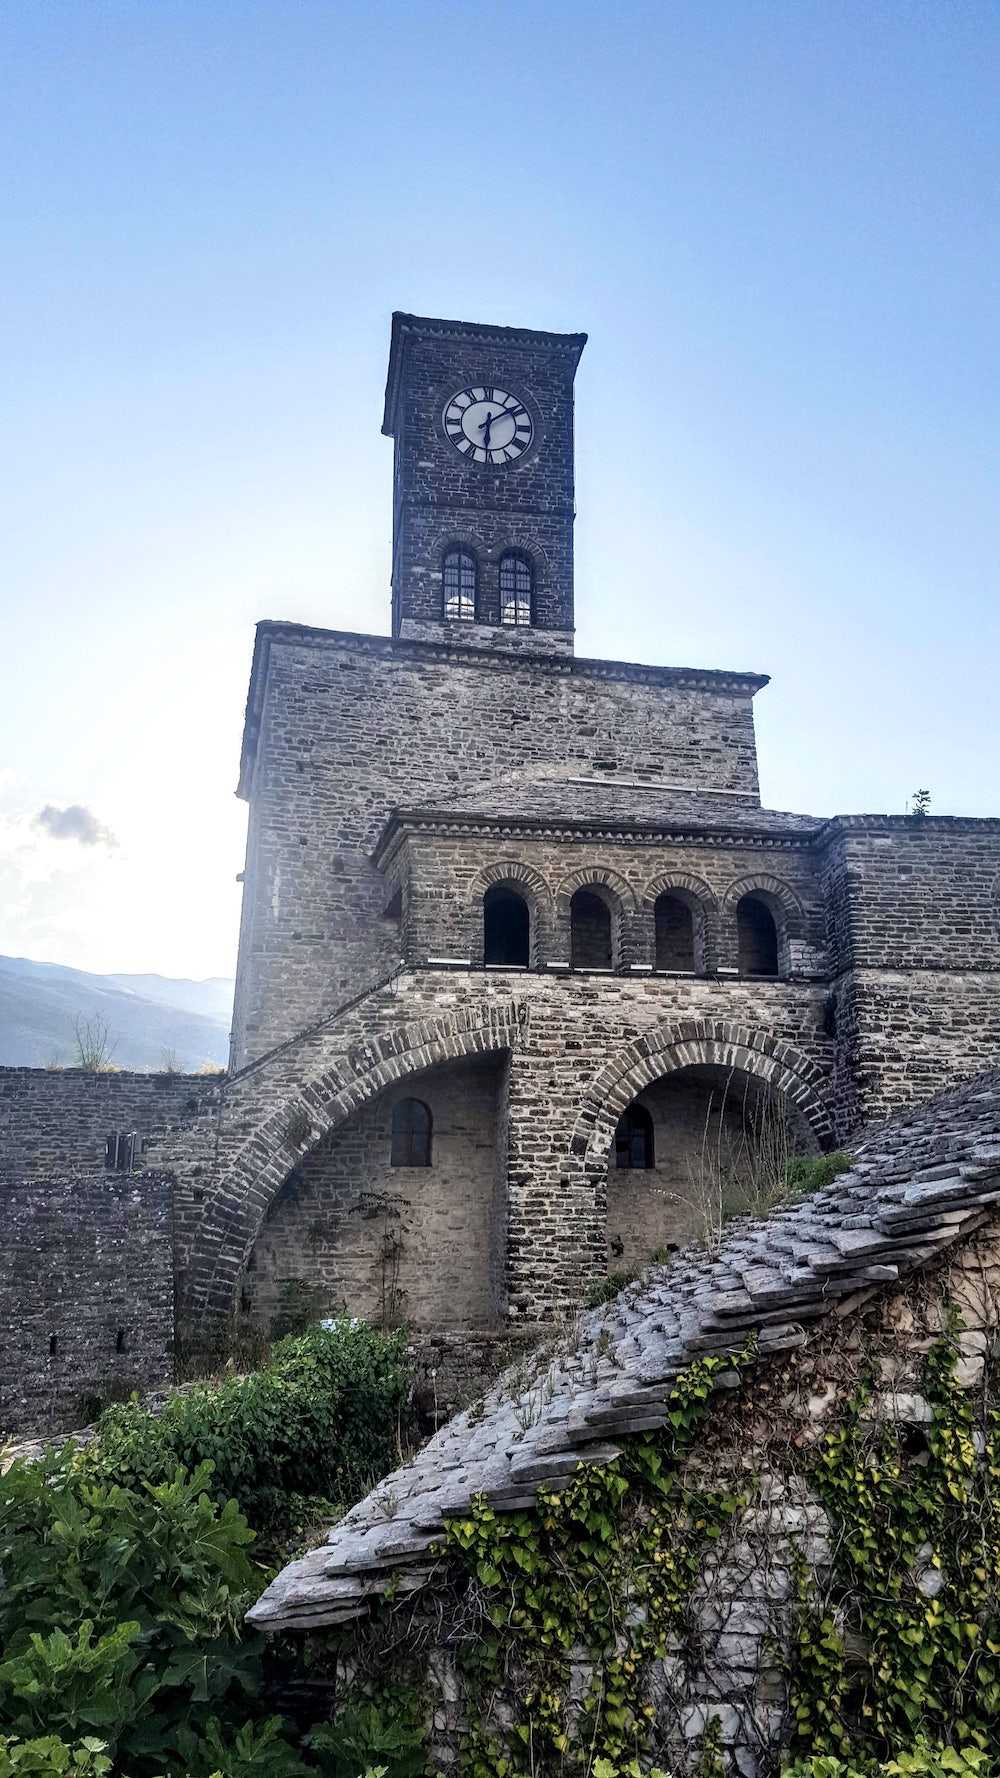 The clock tower at Gjirokaster, Albania